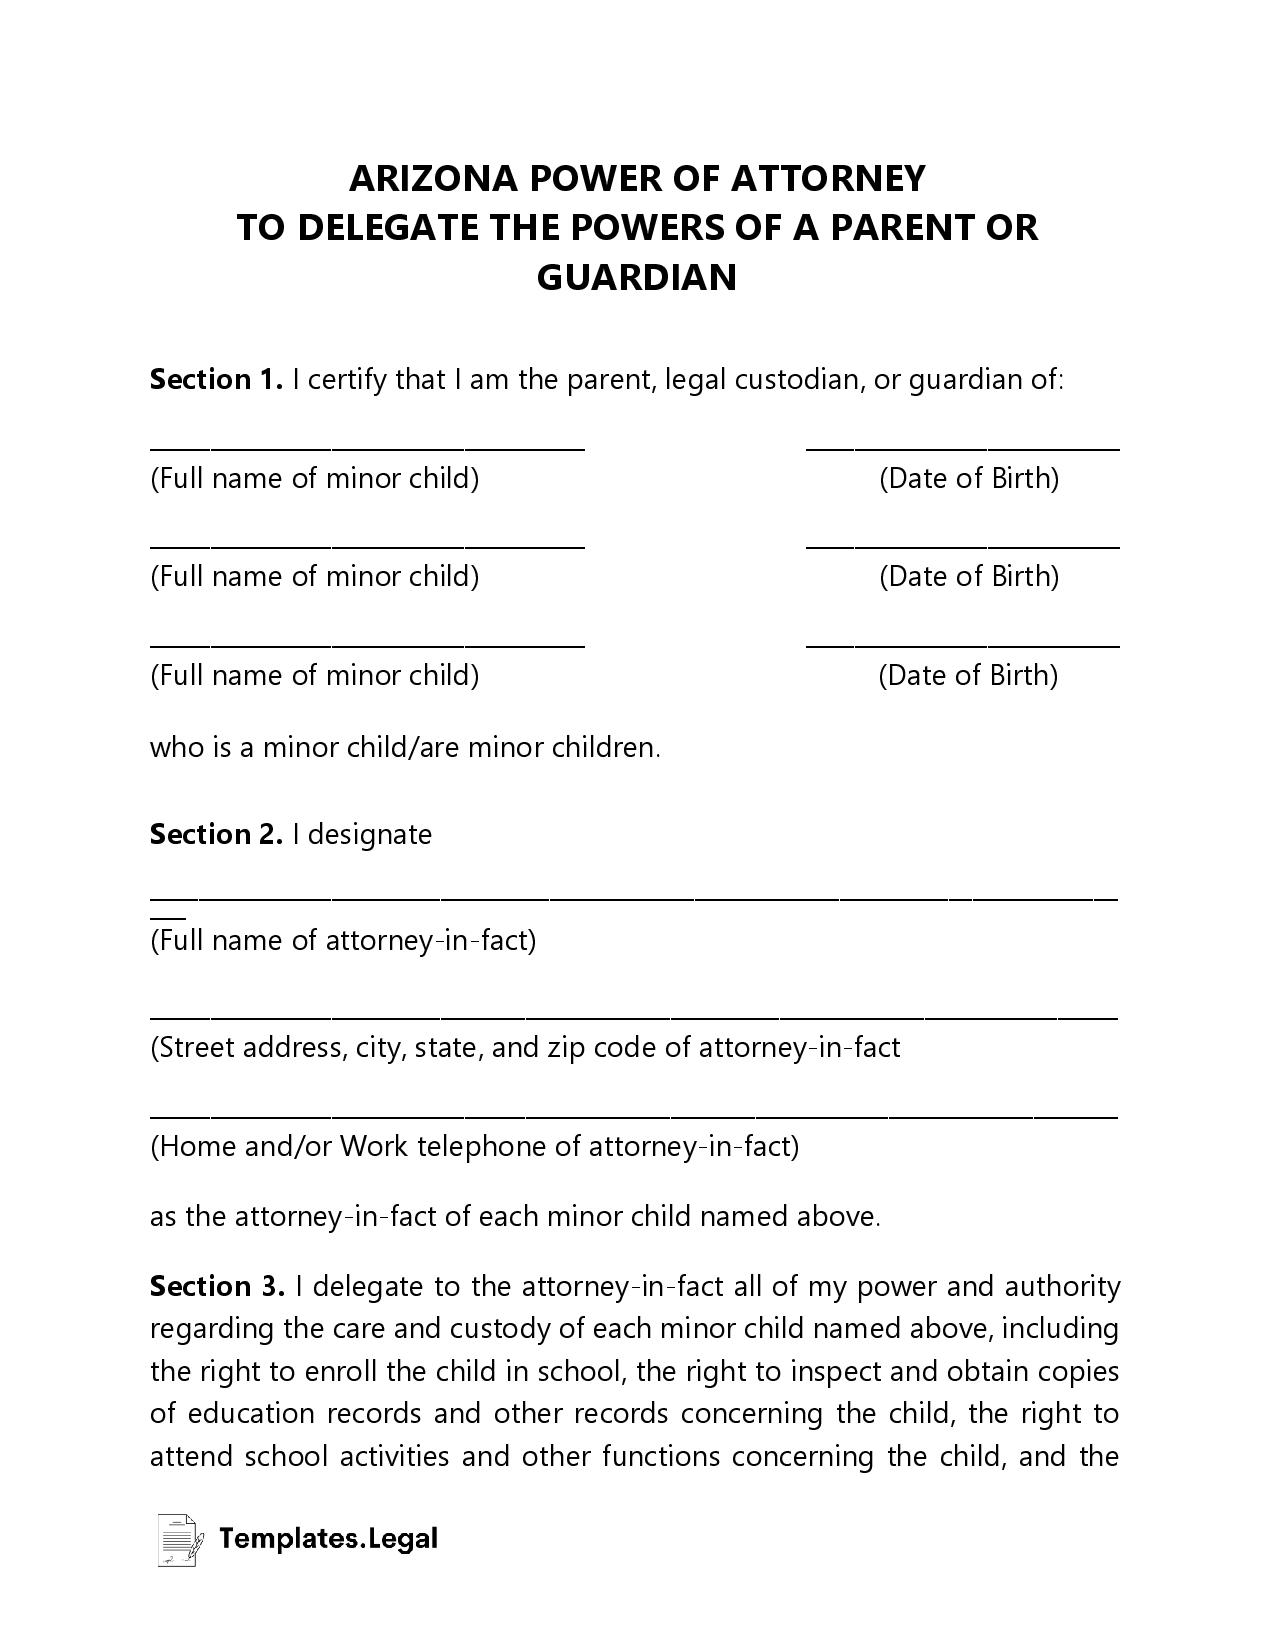 Arizona Minor (Child) Power of Attorney - Templates.Legal